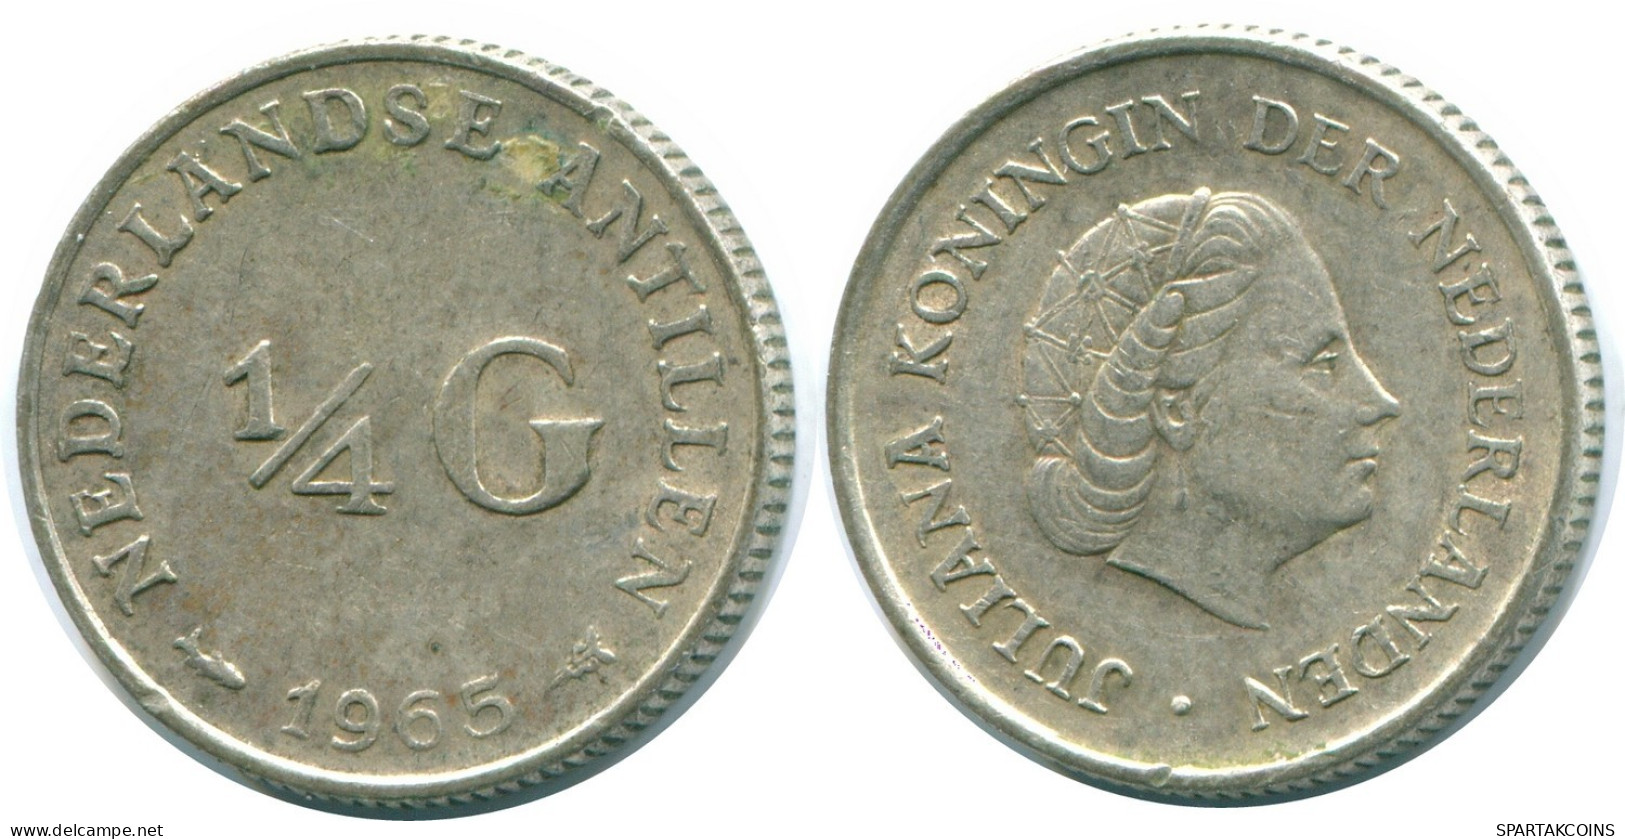 1/4 GULDEN 1965 NETHERLANDS ANTILLES SILVER Colonial Coin #NL11274.4.U.A - Niederländische Antillen